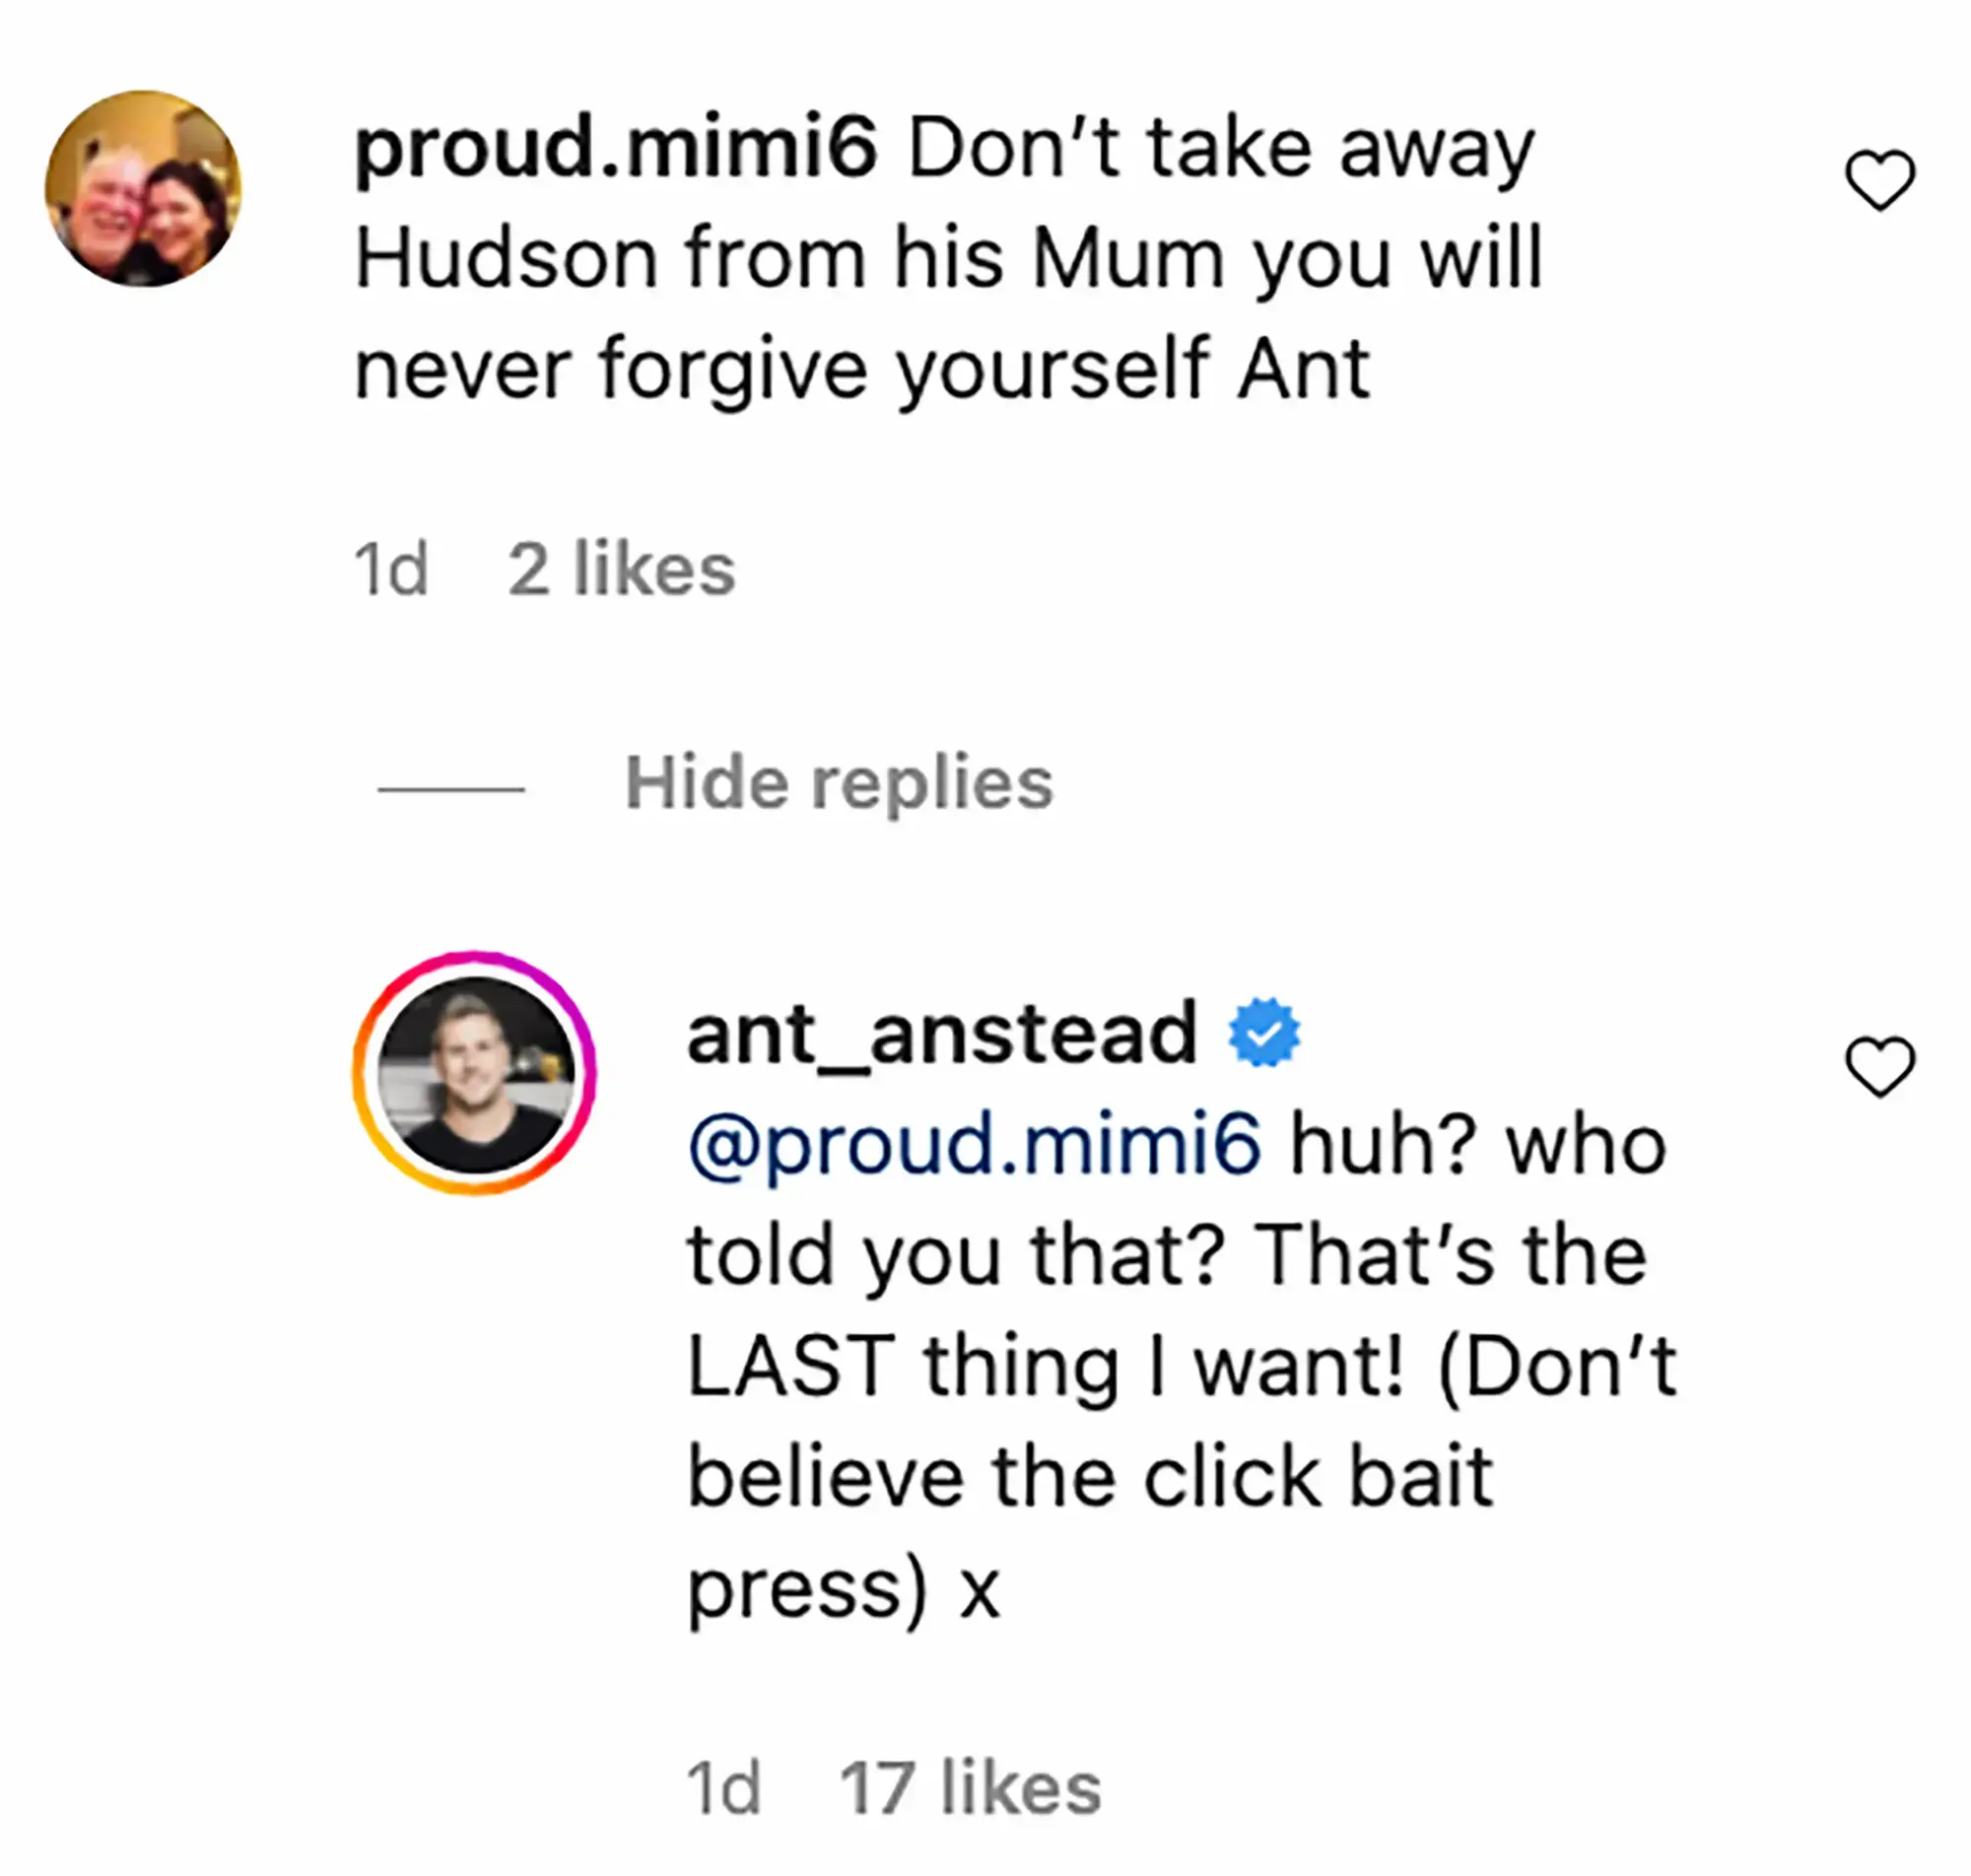 Ant Anstead